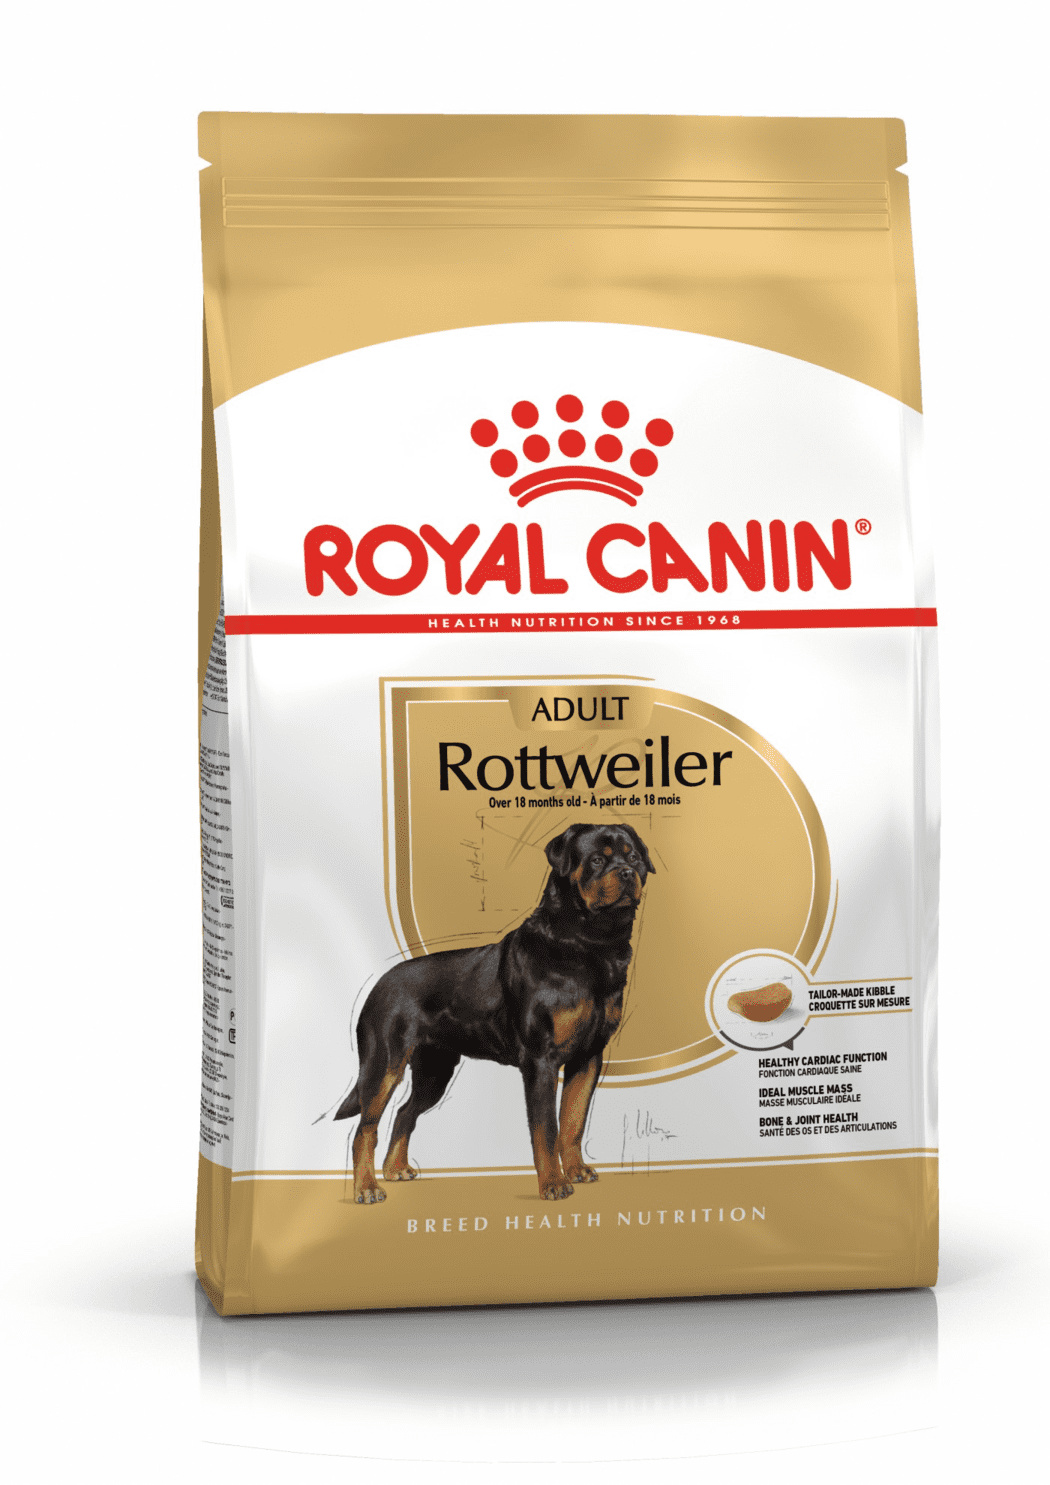 Royal Canin Корм Royal Canin для взрослого ротвейлера с 18 месяцев (12 кг)